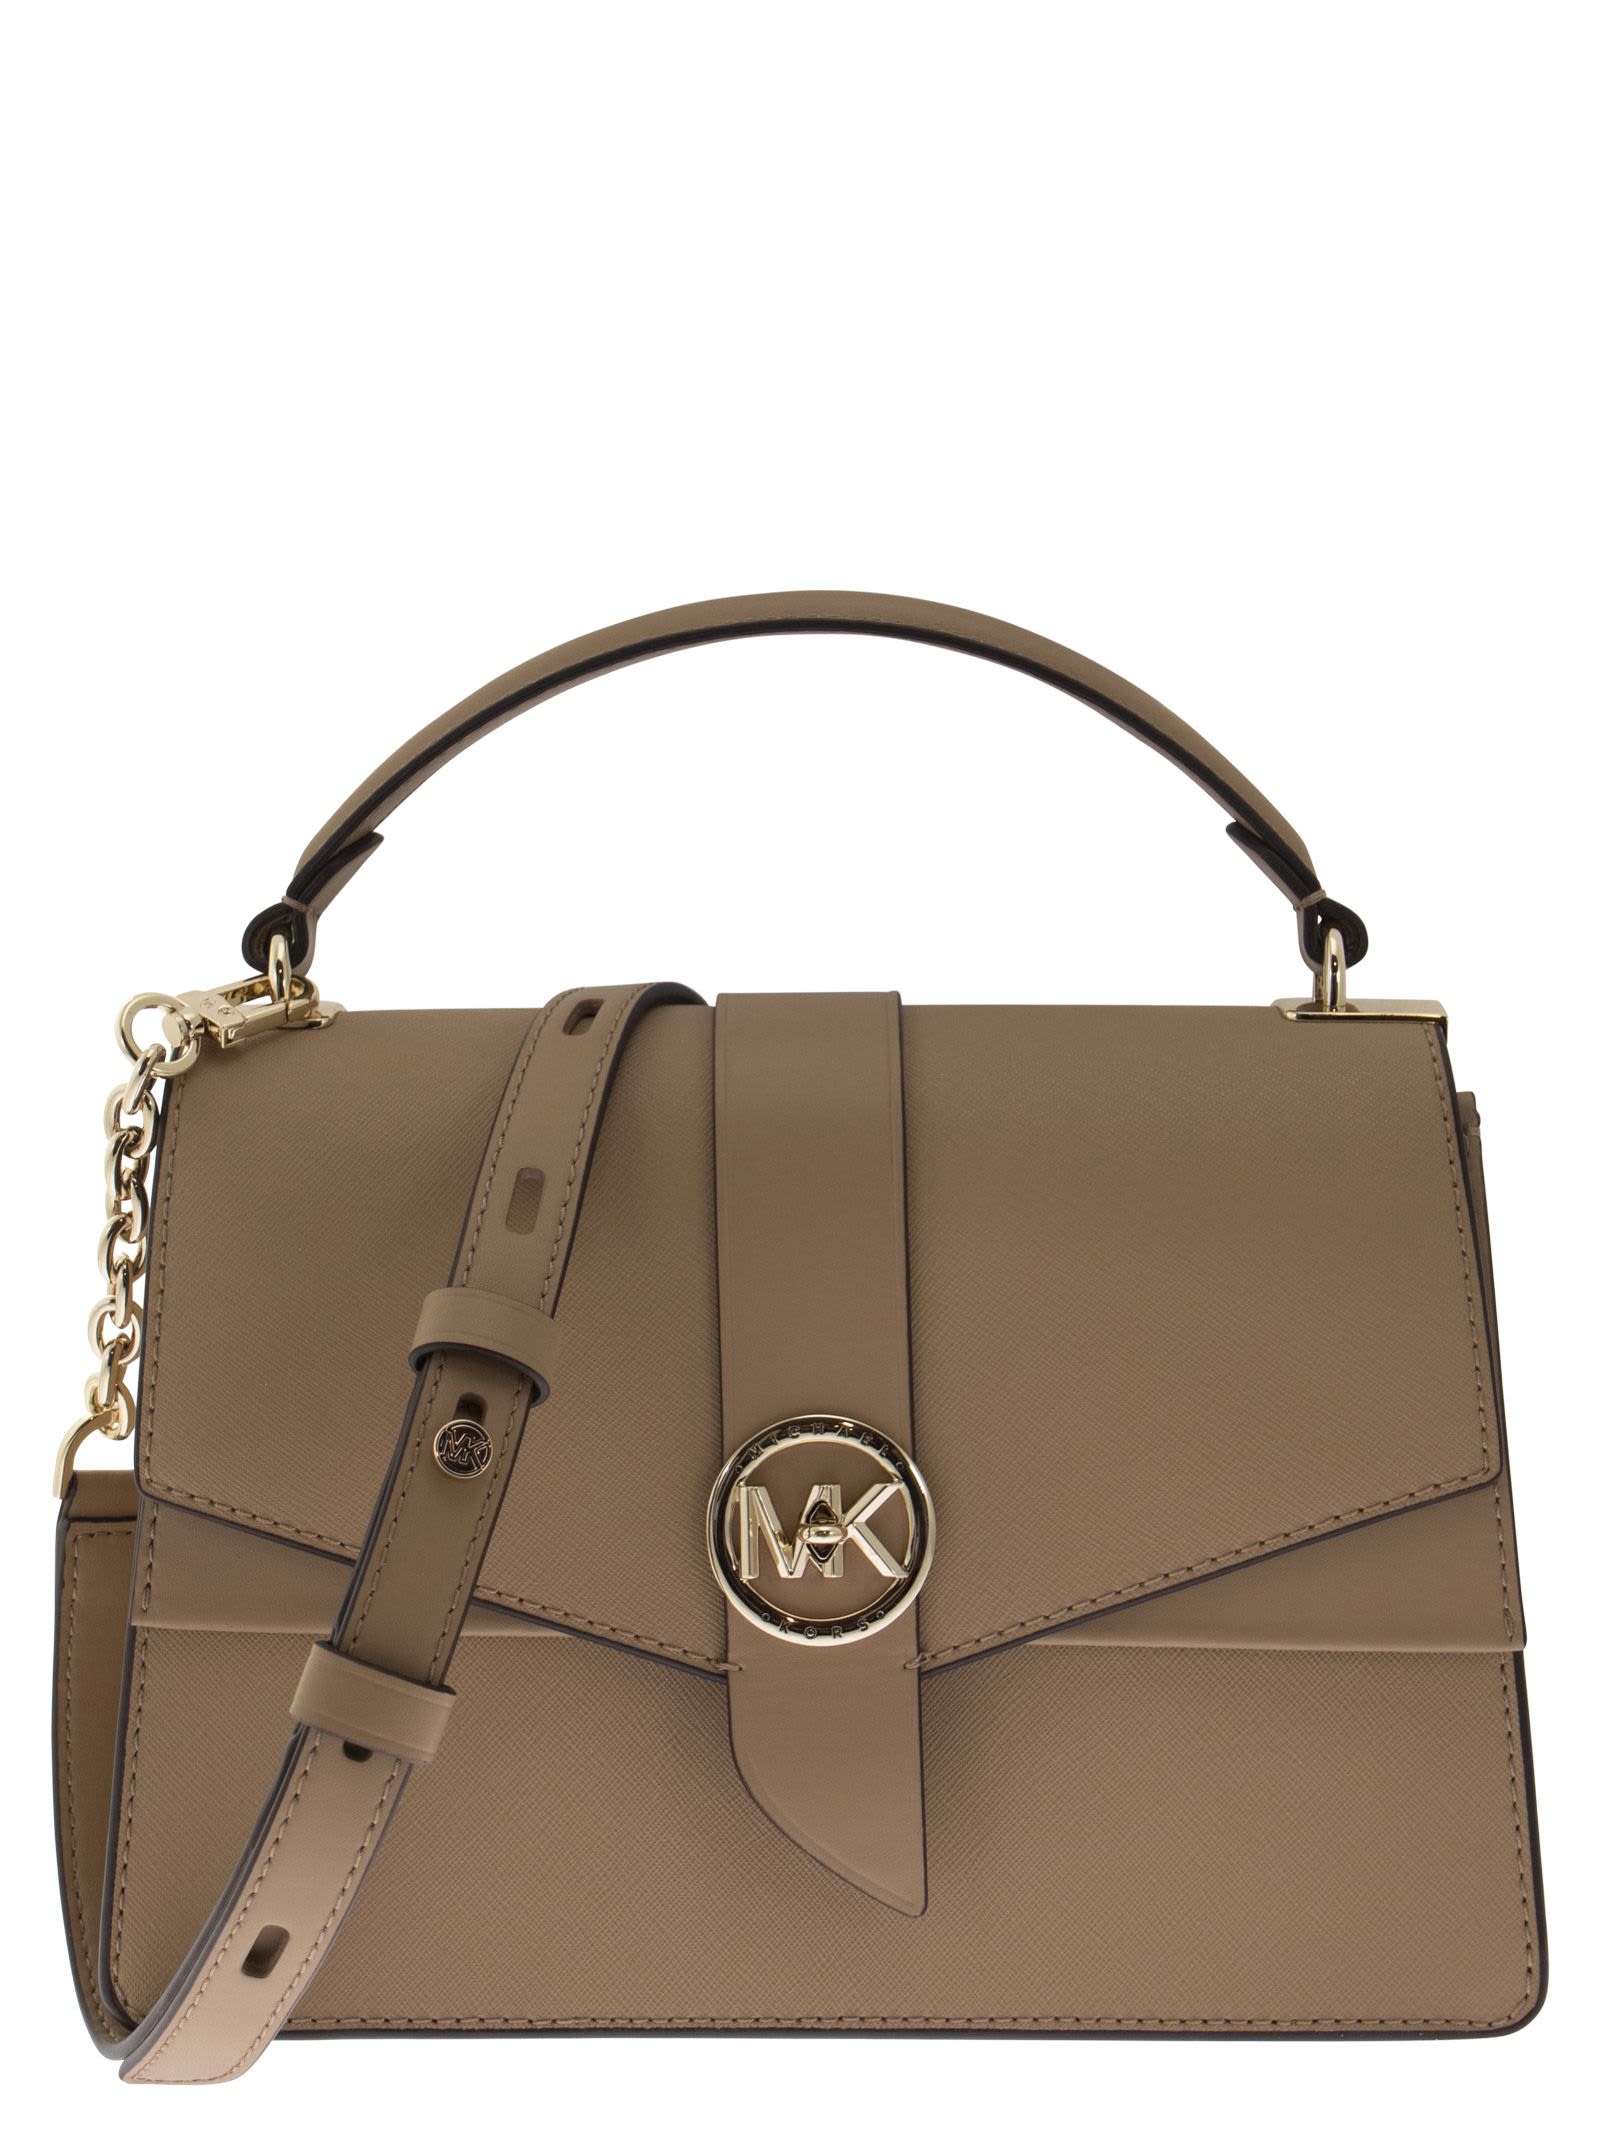 Michael Kors Satchel - Saffiano Leather Handbag